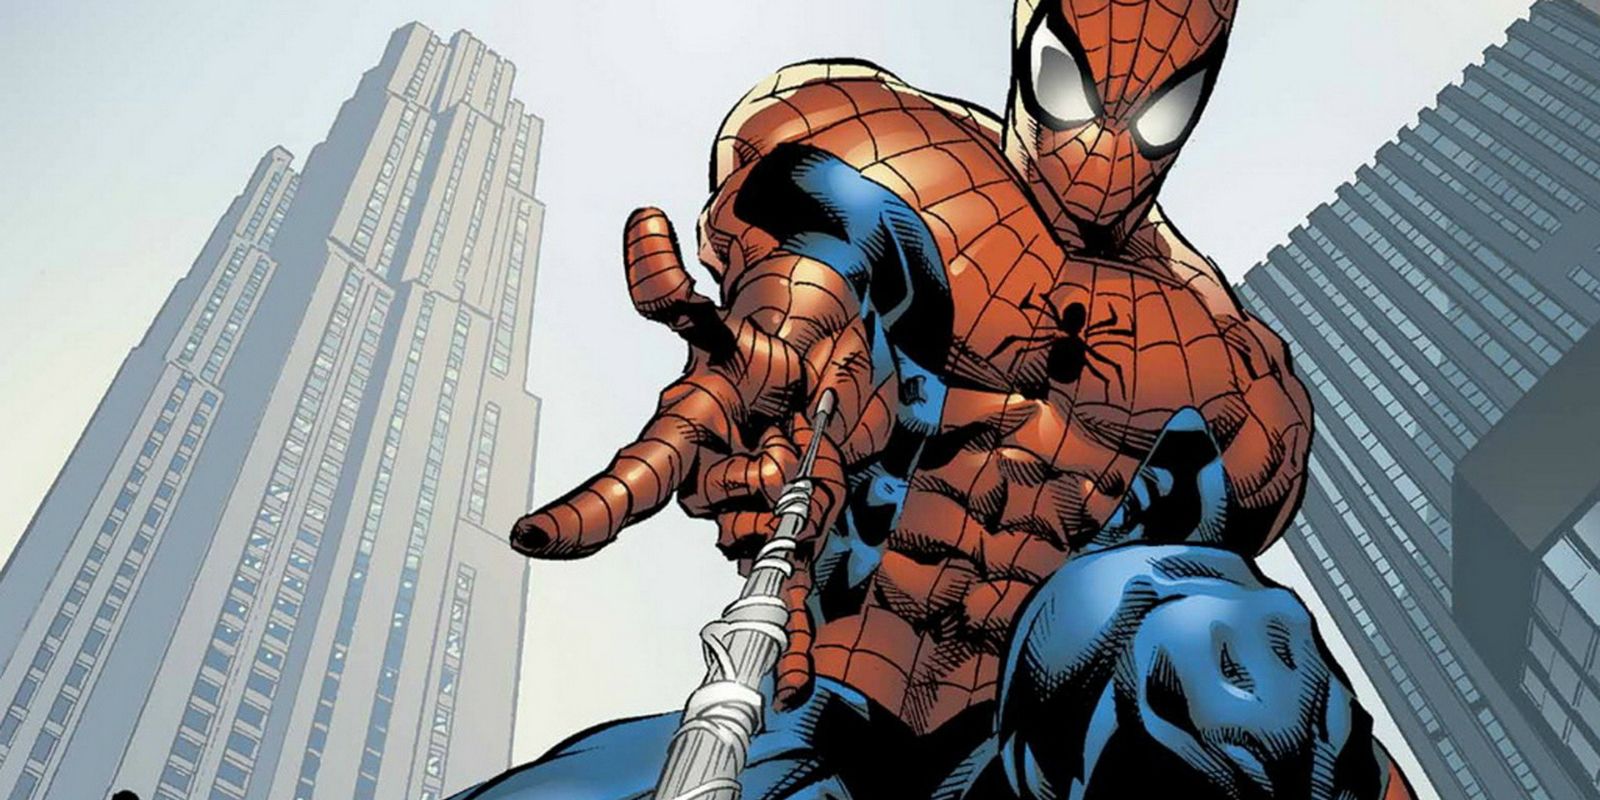 Spider-Man in Marvel Comics